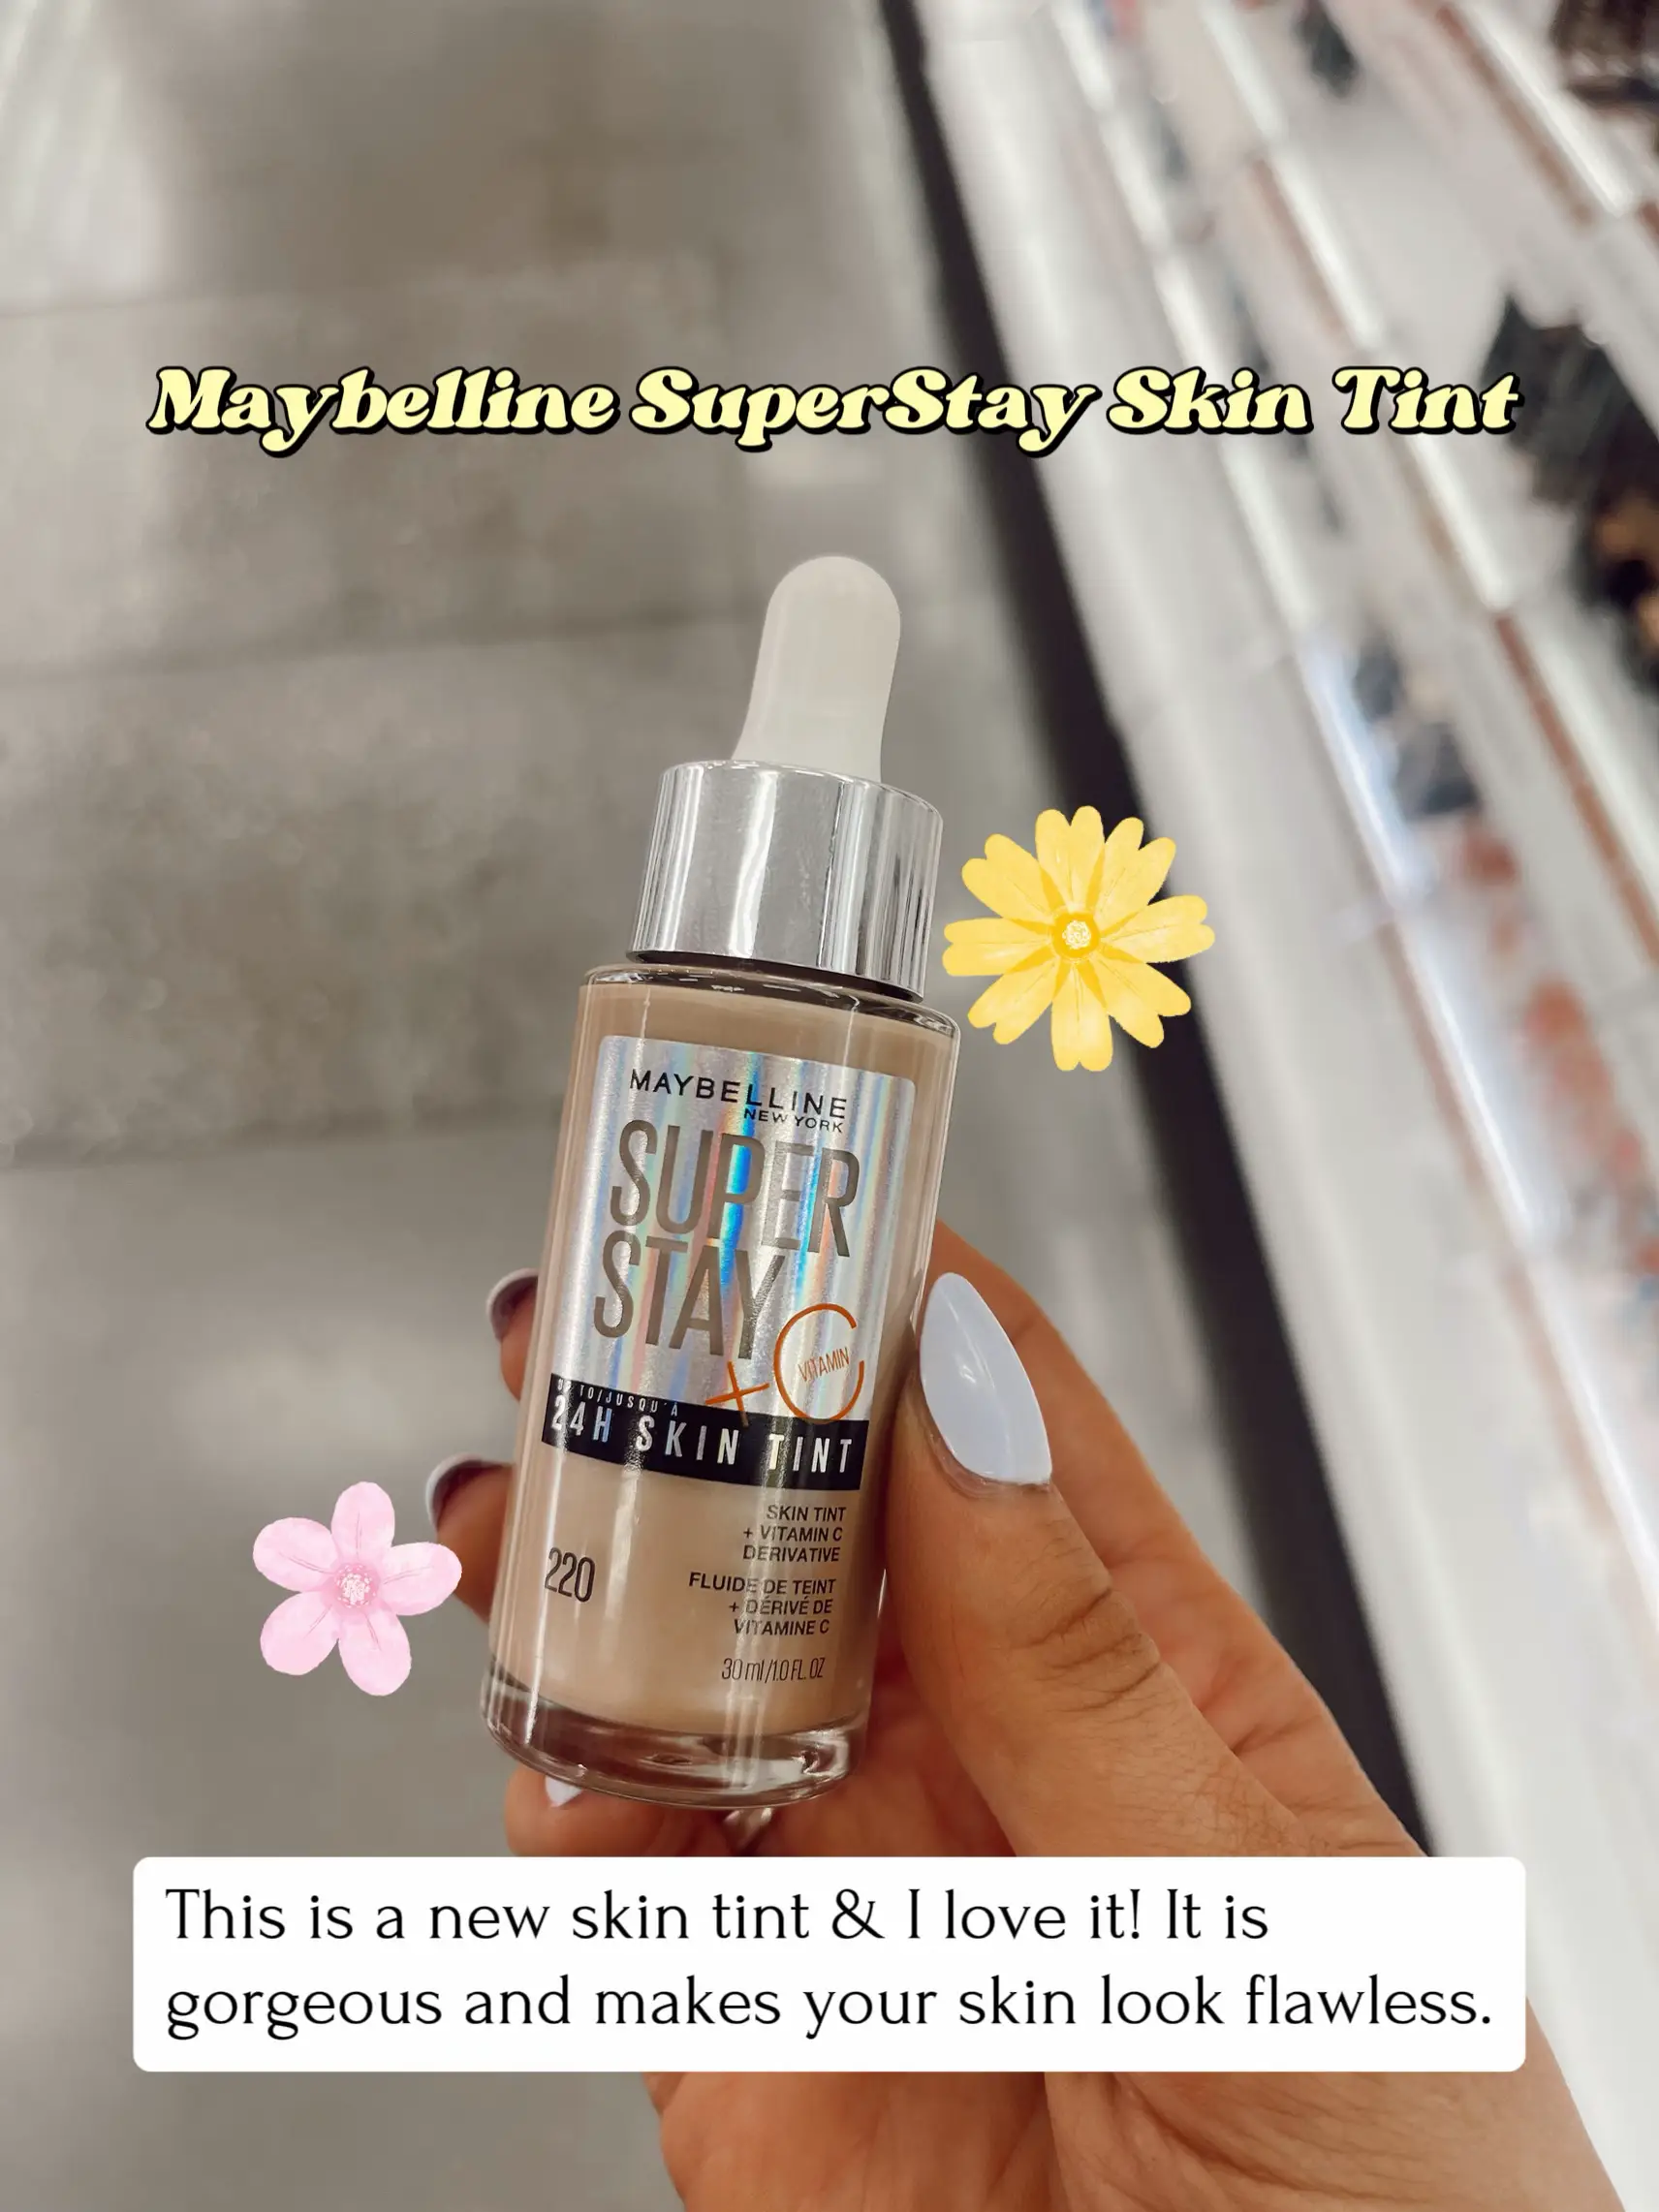 Maybelline - Serum Makeup Base SuperStay 24H Skin Tint + Vitamin C - 66